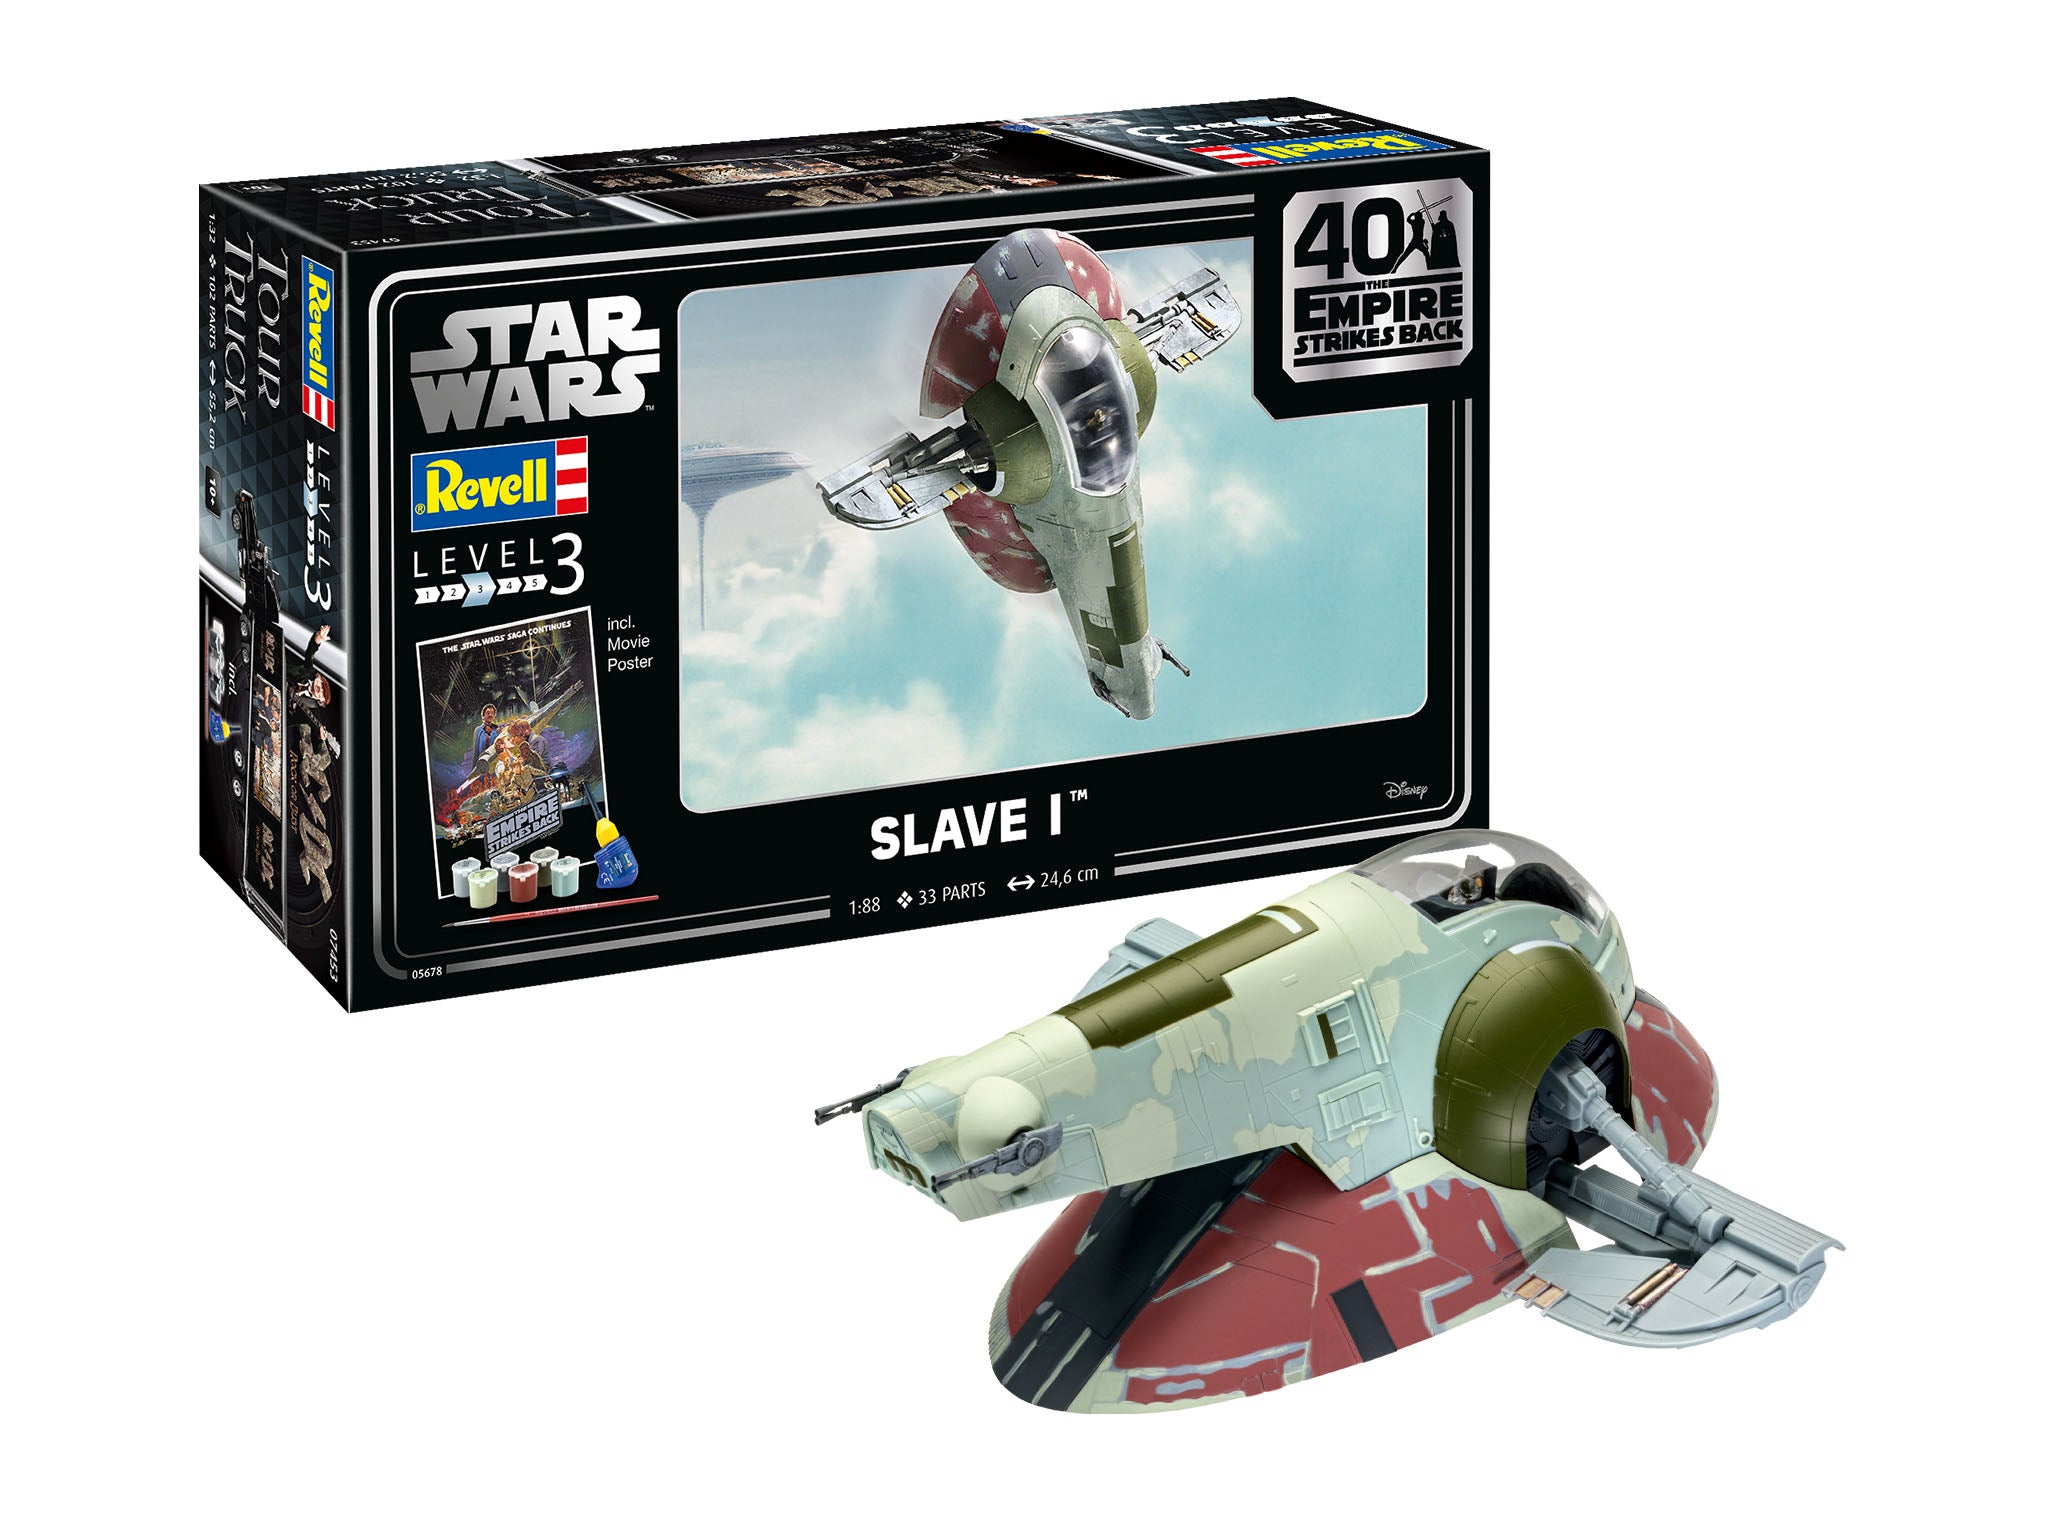 Star Wars Gift Set Slave 1 1:88 Scale Kit